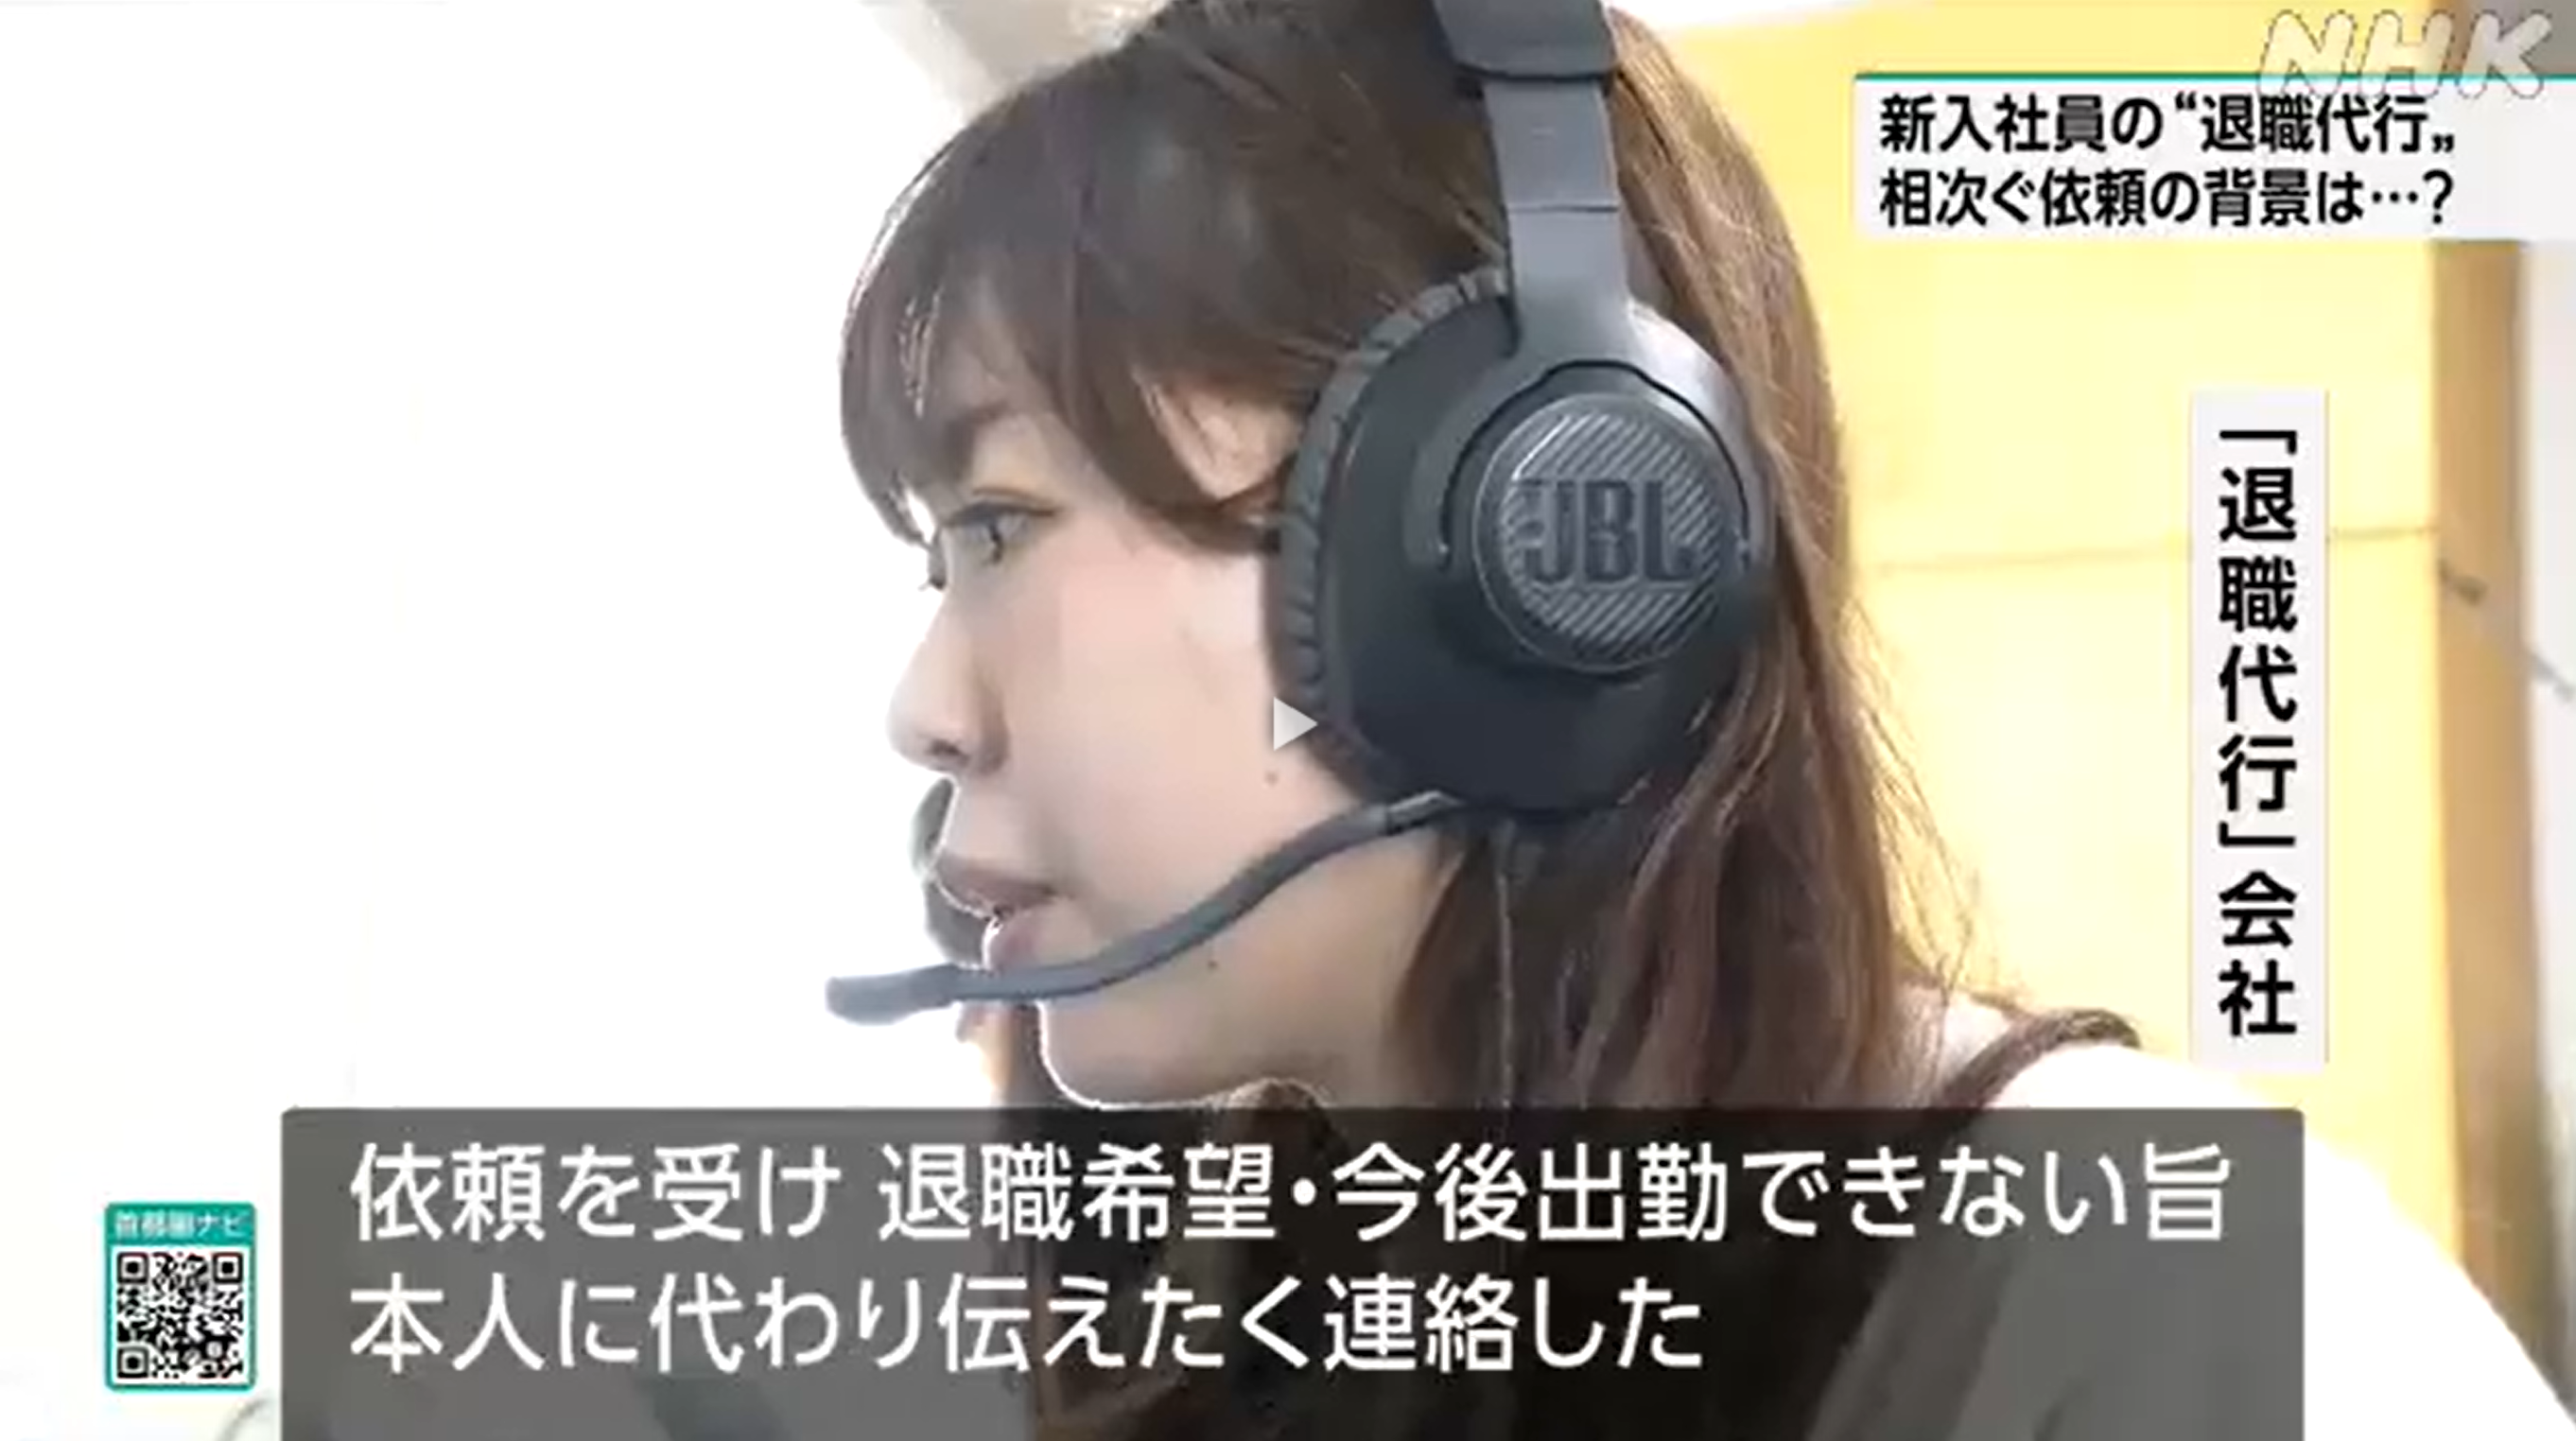 NHK『首都圏ネットワーク』にて退職代行モームリを紹介